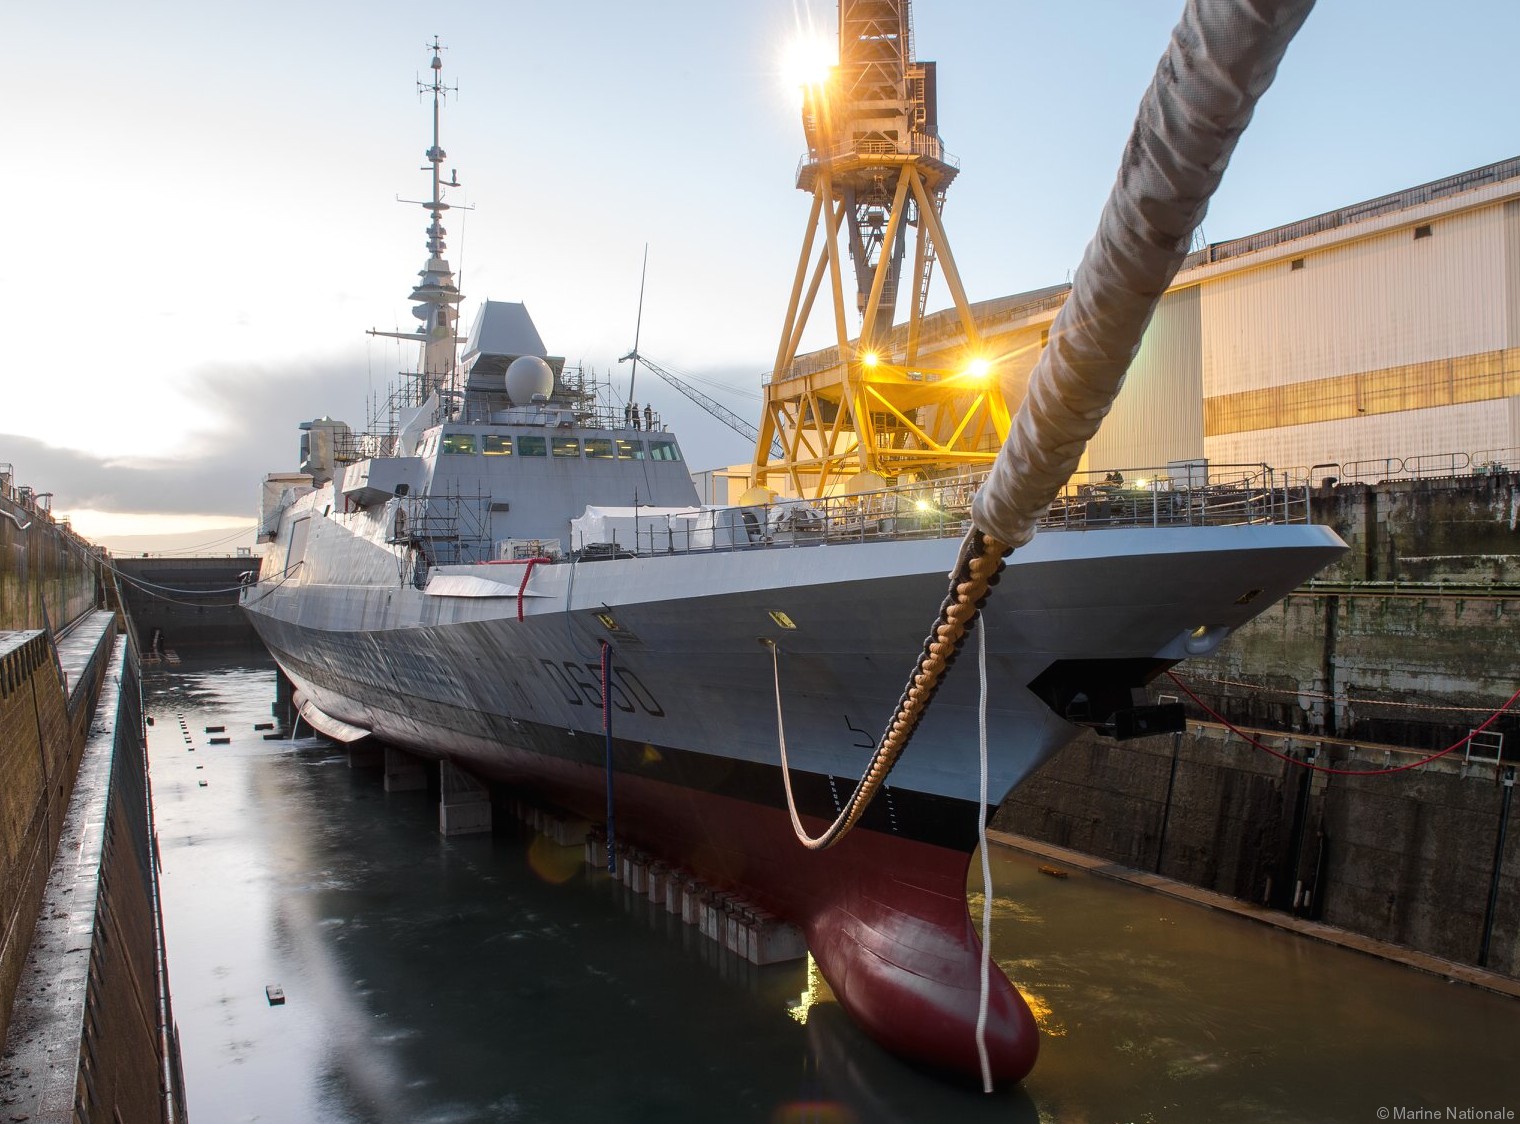 d-650 fs aquitaine fremm class frigate fregate multi purpose french navy marine nationale 32 dry dock